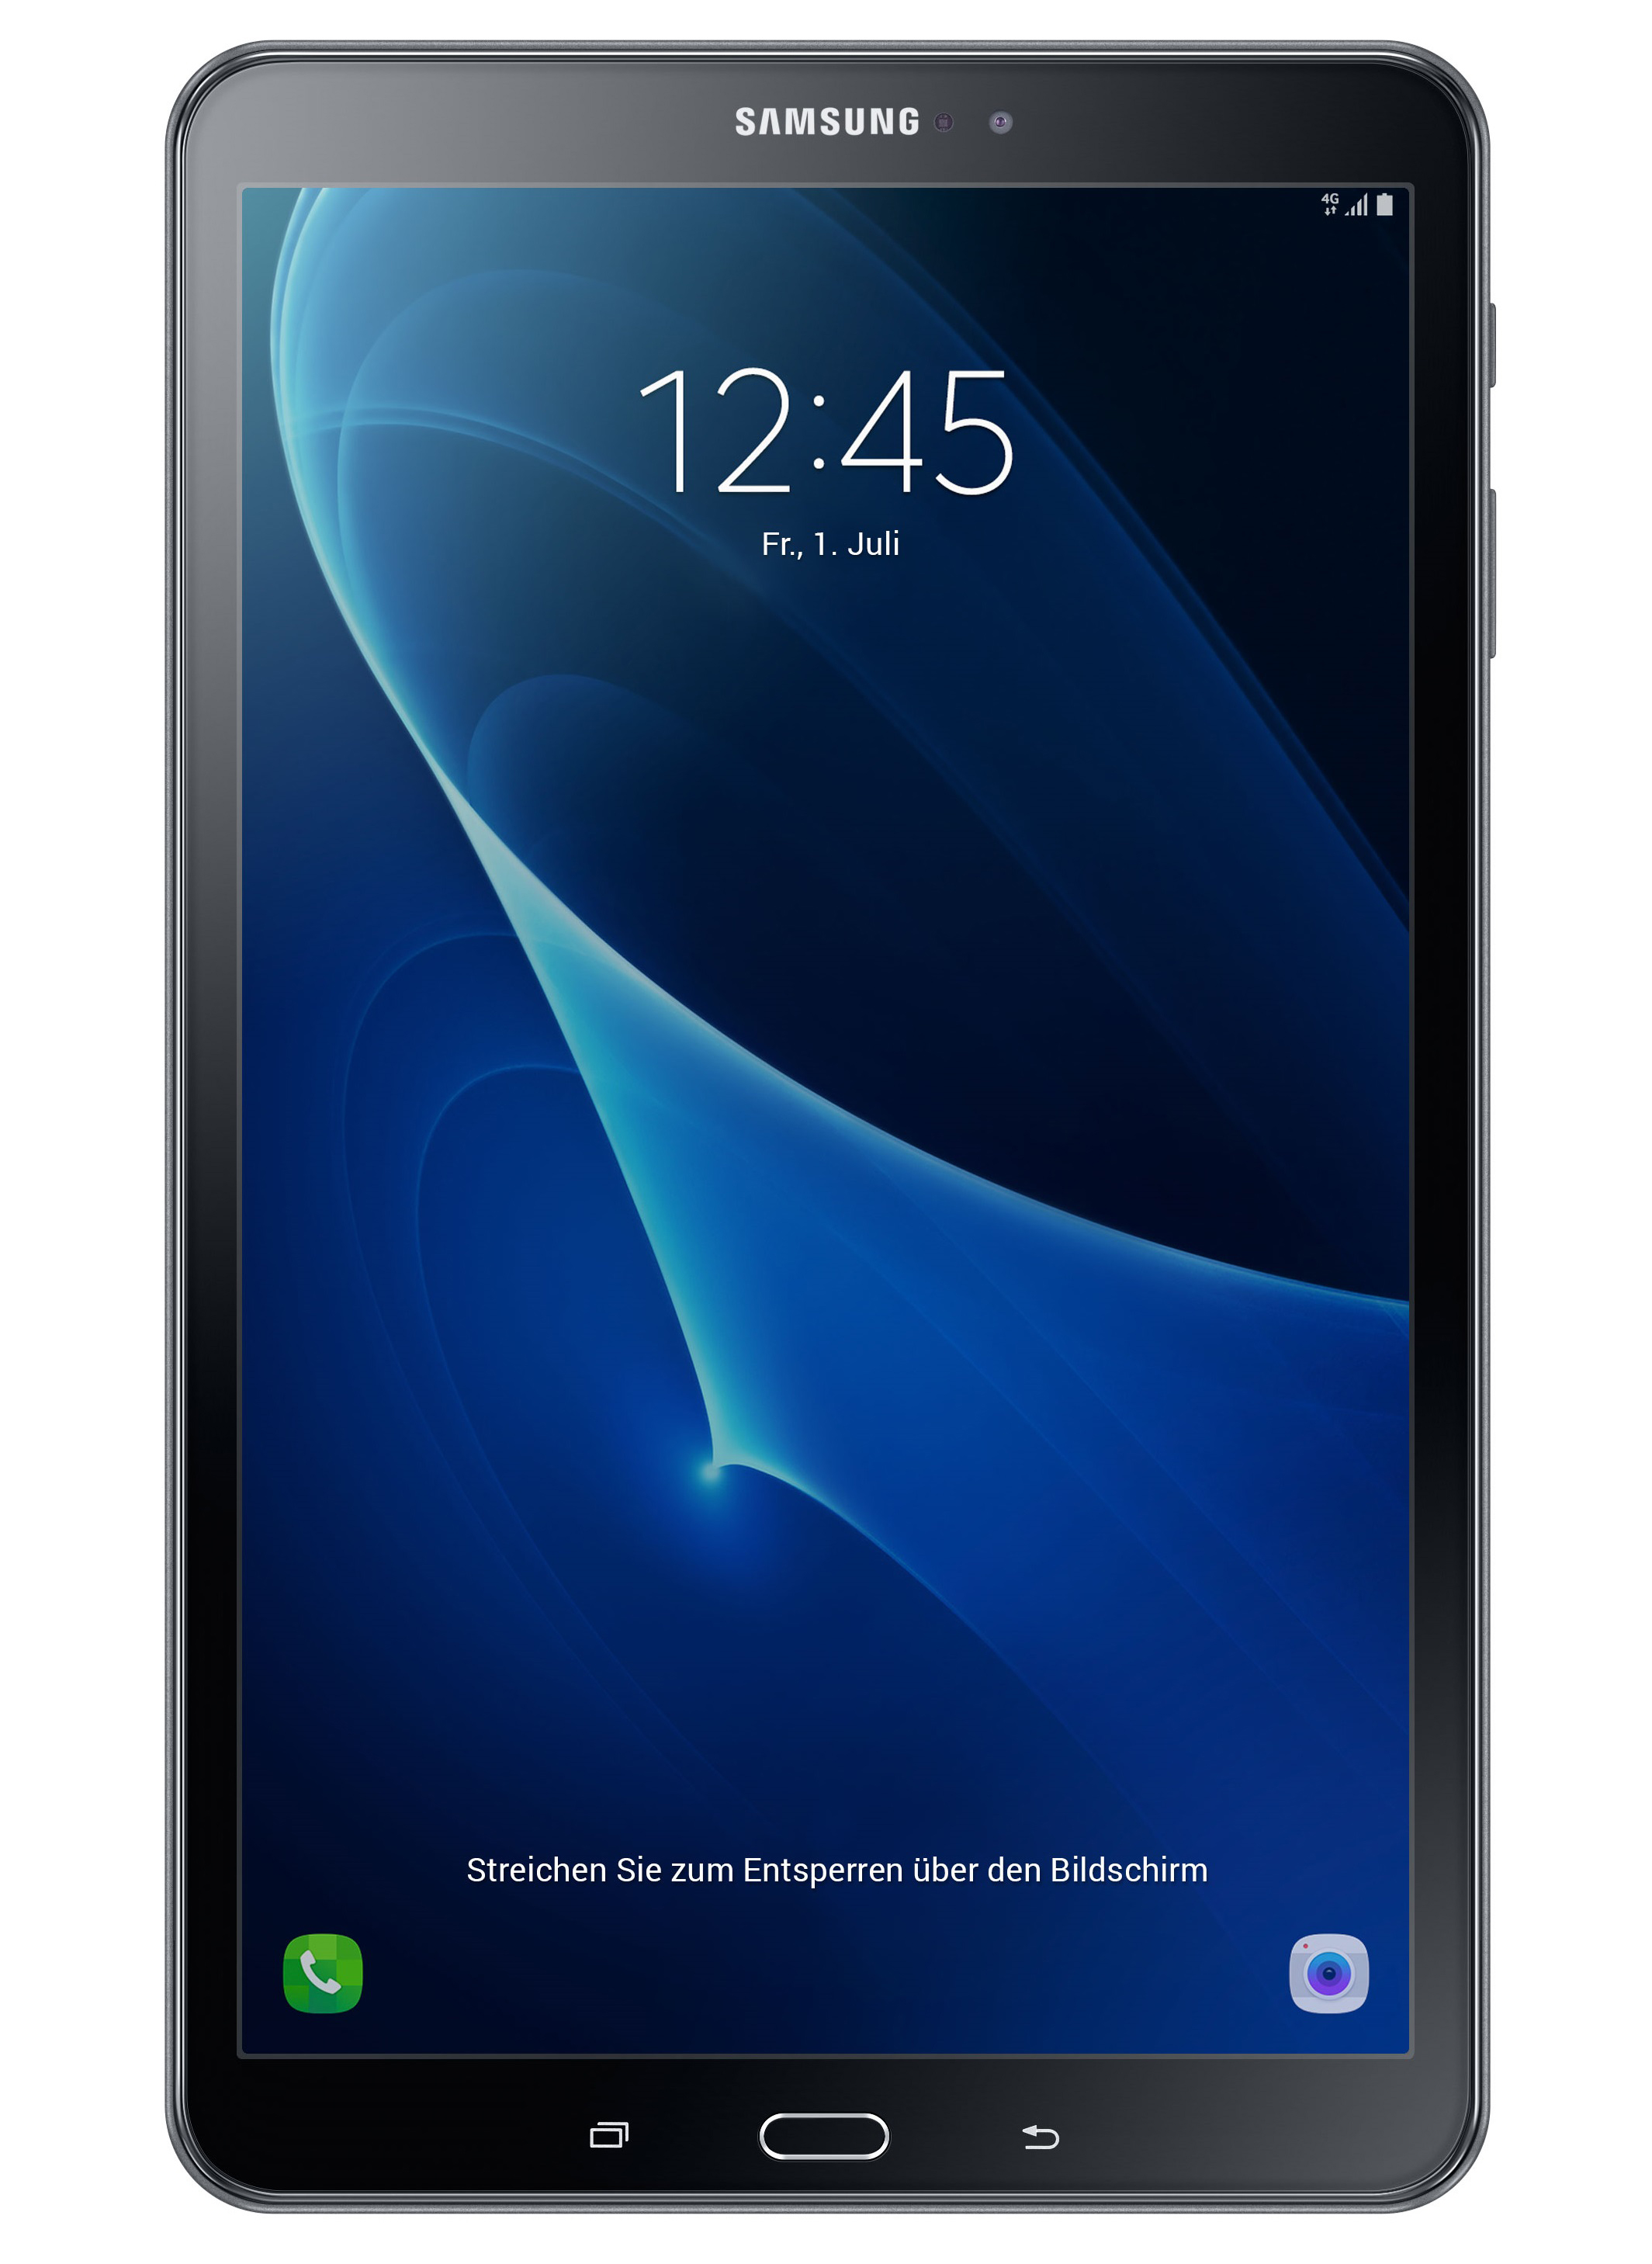 Samsung Galaxy Tab 10.1 renovada